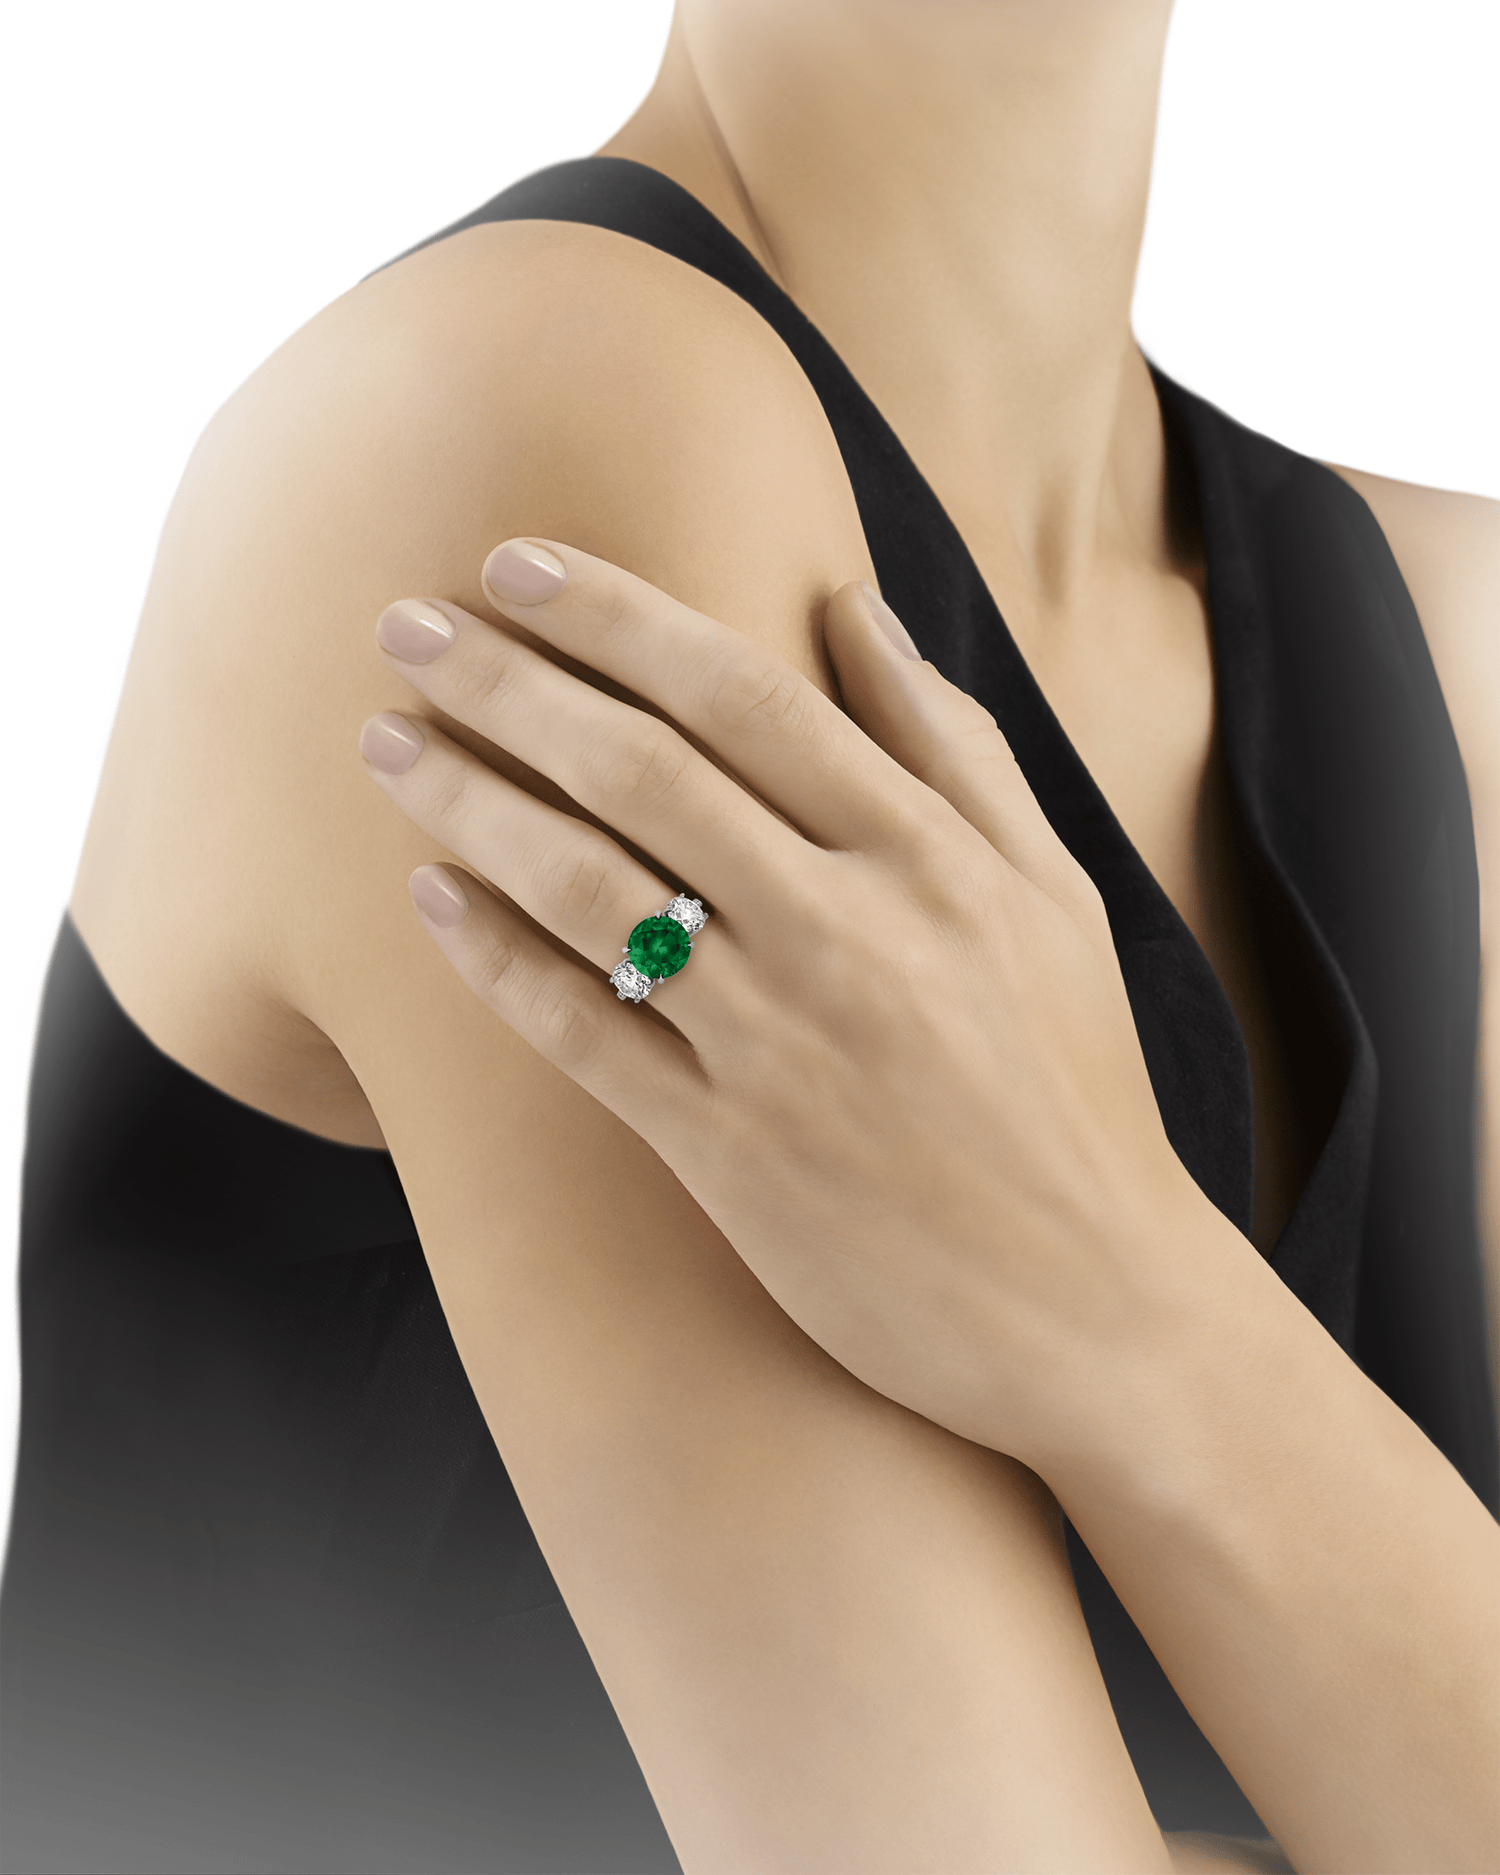 Zambian Emerald Ring, 3.49 Carats